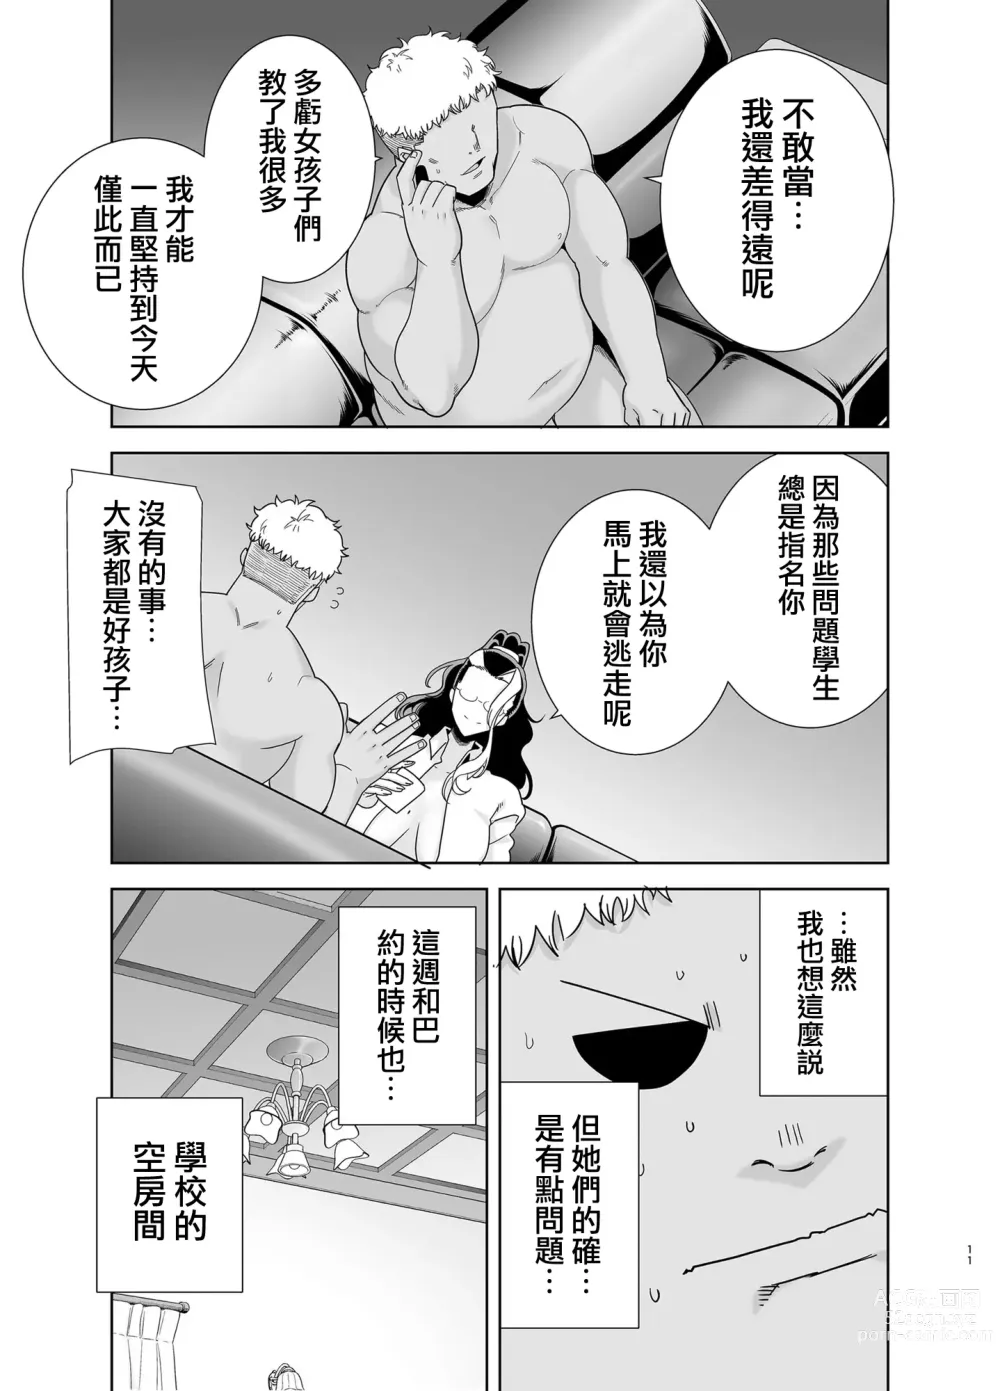 Page 10 of manga 聖華女学院高等部公認竿おじさん 5